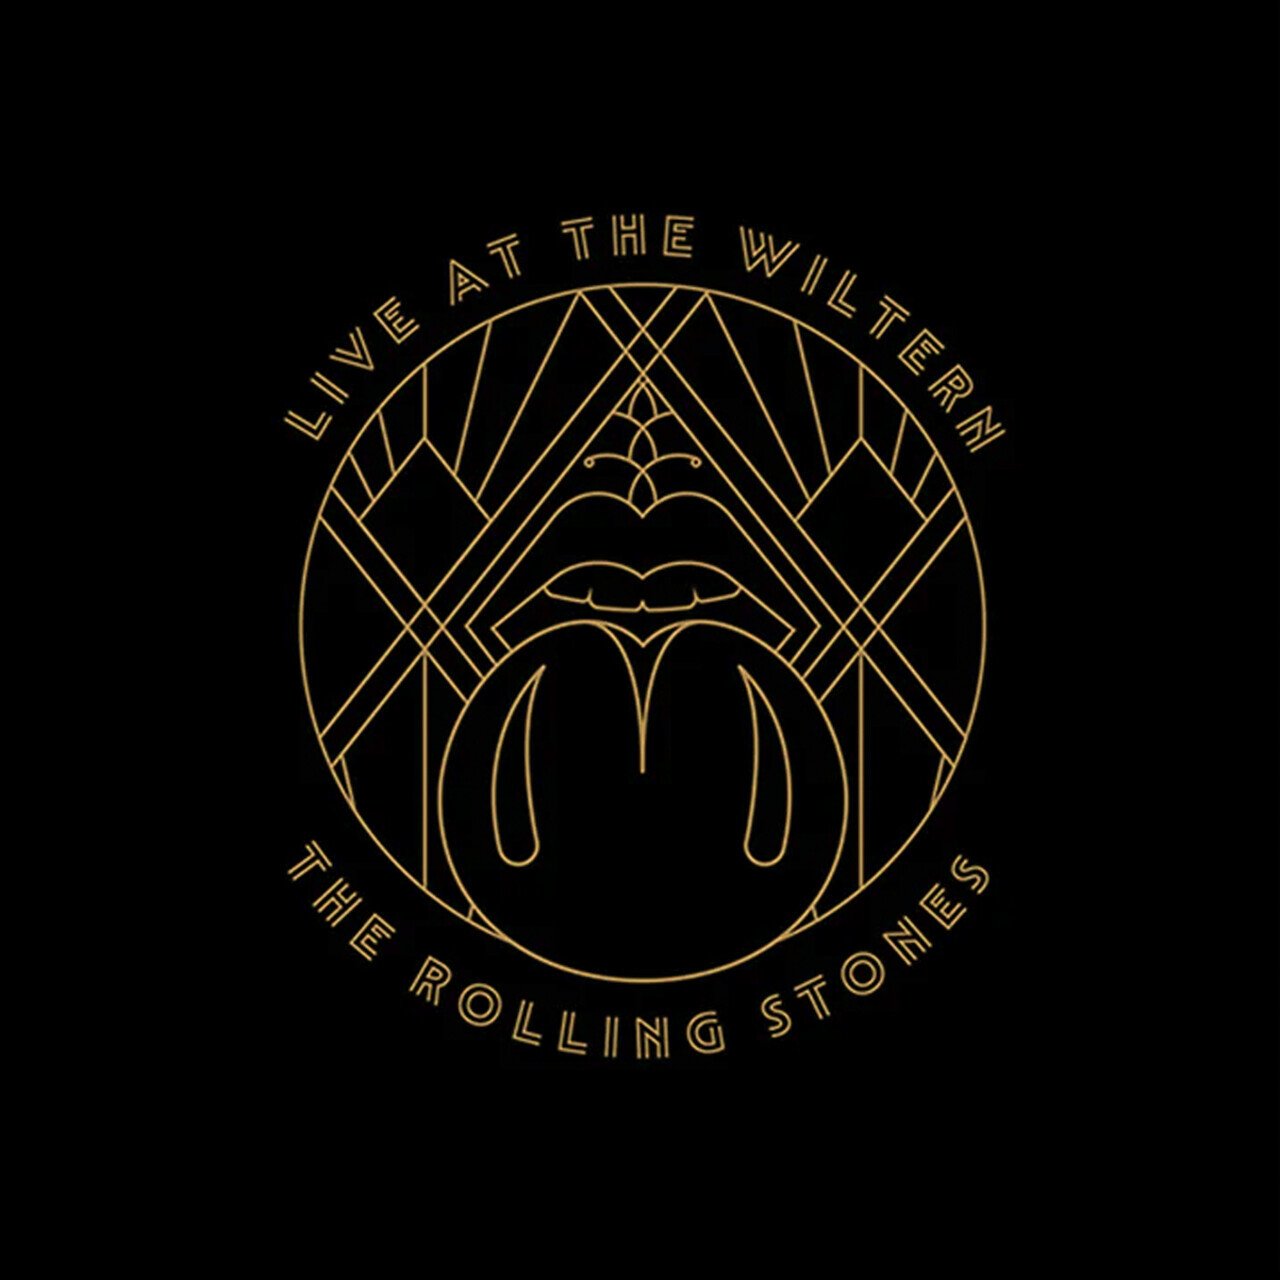 Рок Universal (Aus) Rolling Stones, The - Live At The Wiltern (Black Vinyl 3LP) рок abkco rolling stones the let it bleed